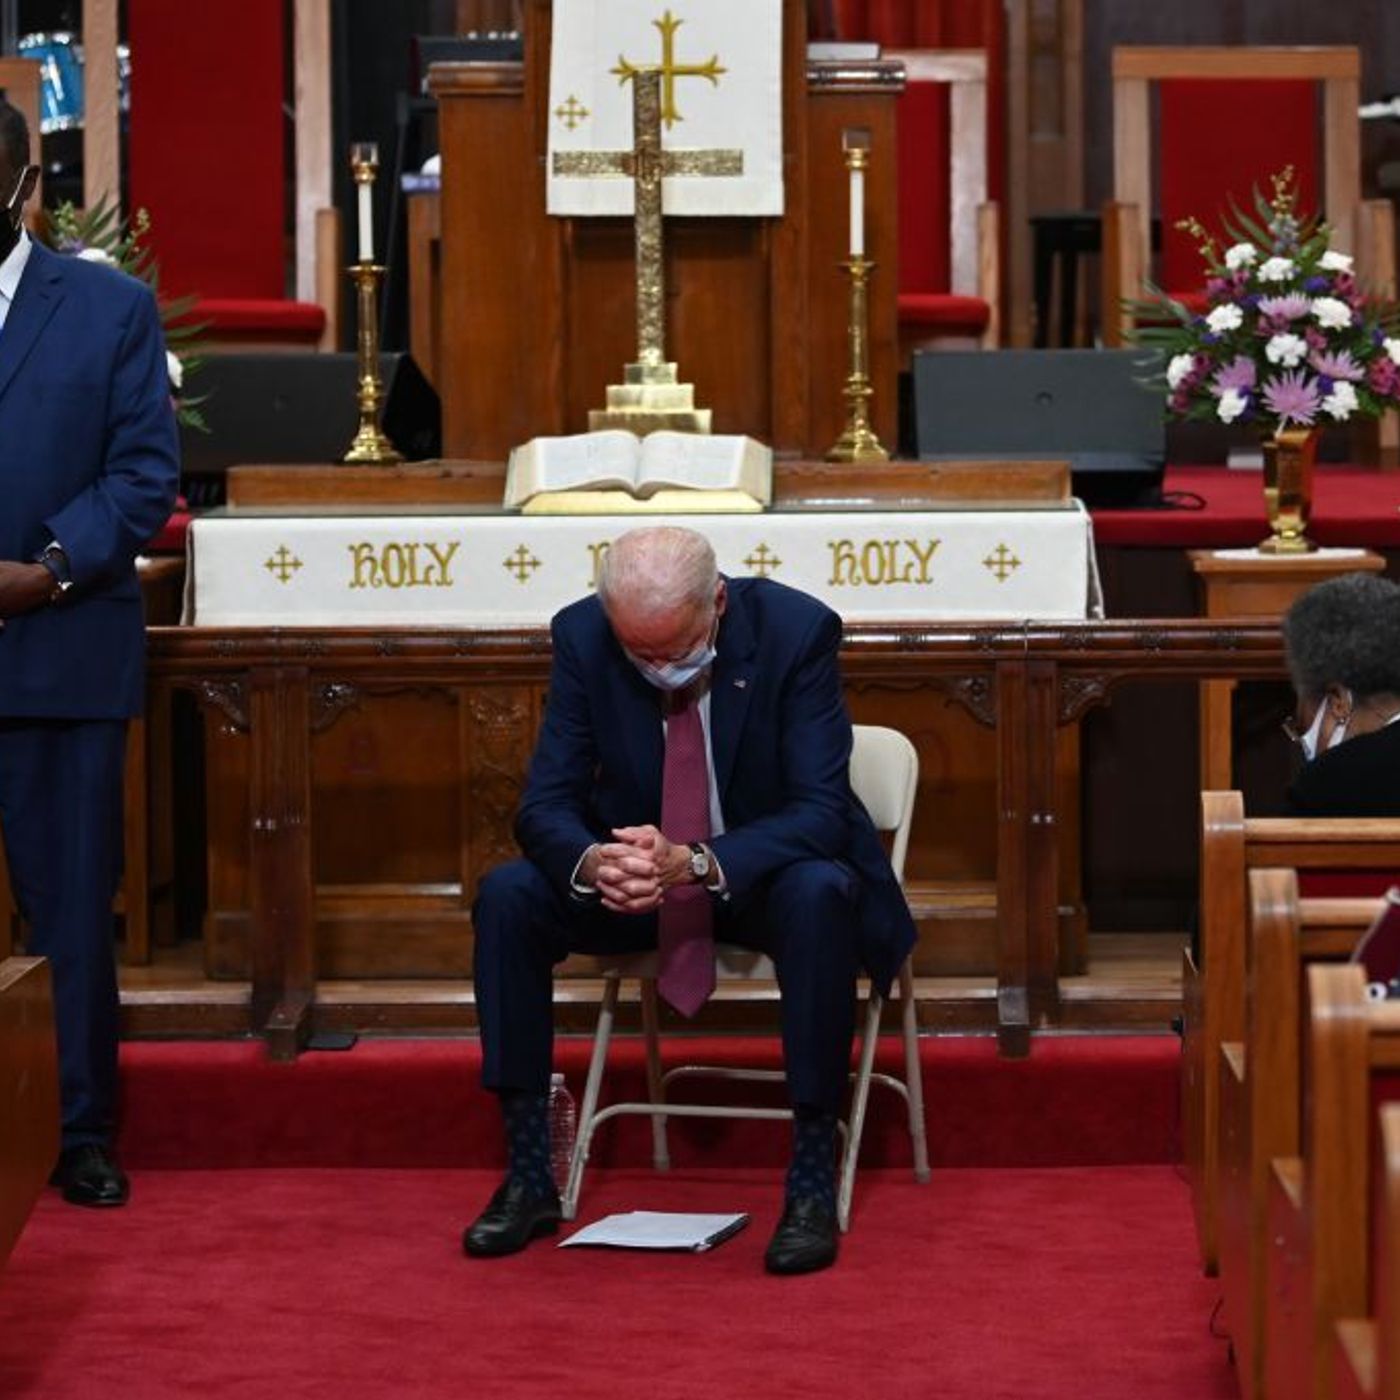 Is Joe Biden a good Catholic?